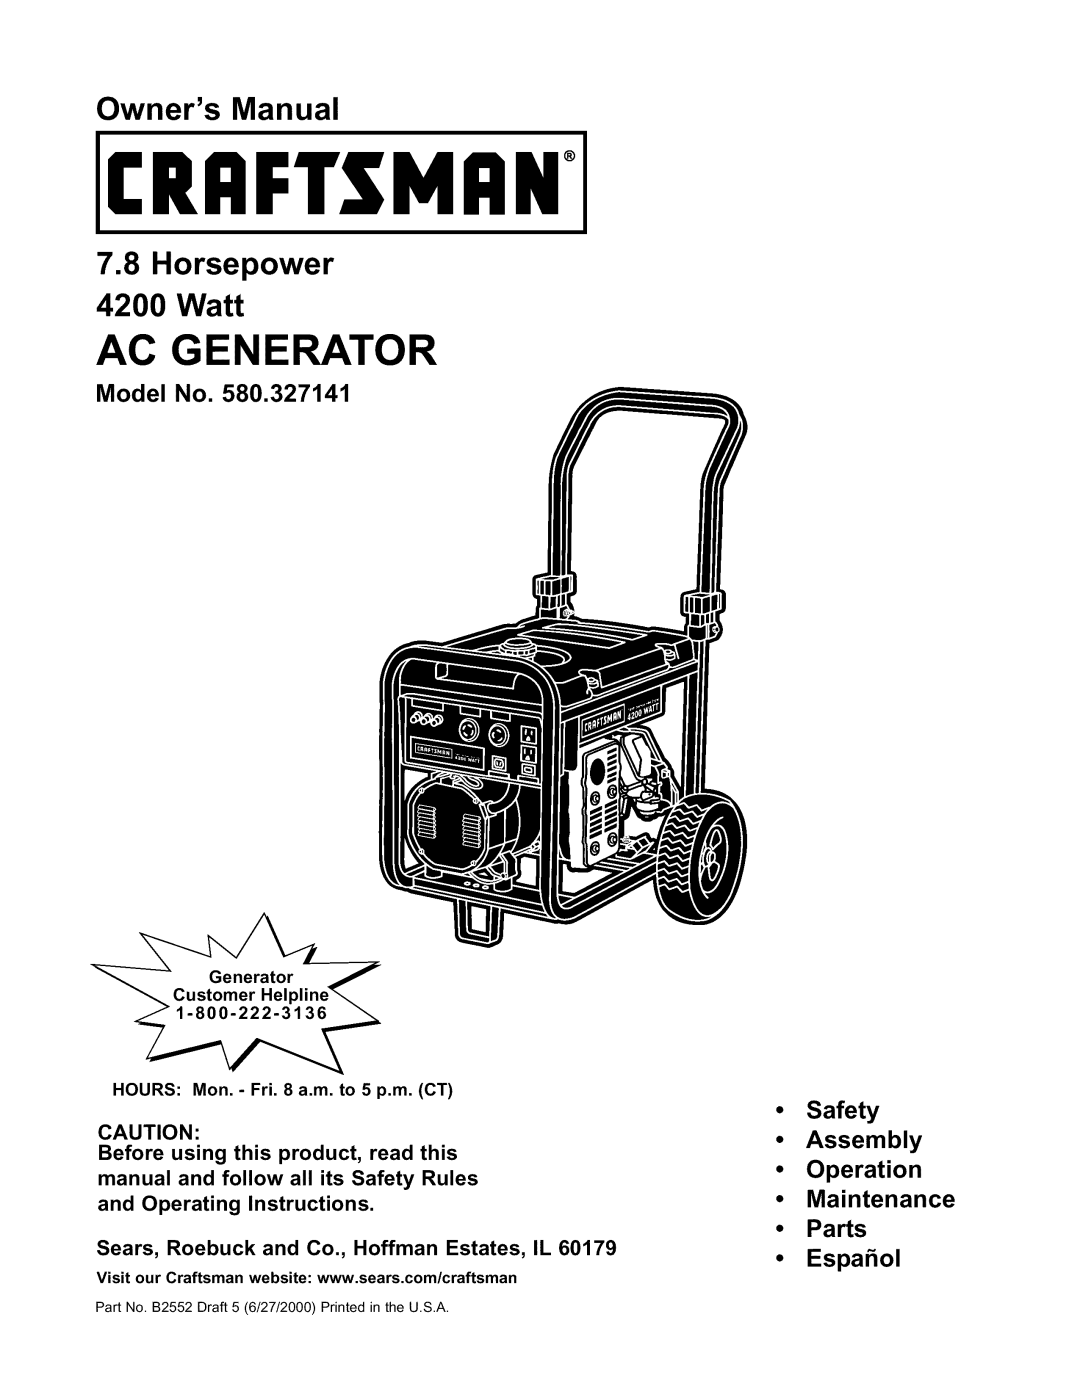 Craftsman 580.327141 owner manual Owners Manual, 78Horsepower 4200 Watt, CRRFT$14RN, Ac Generator, Model No, Safety, Parts 